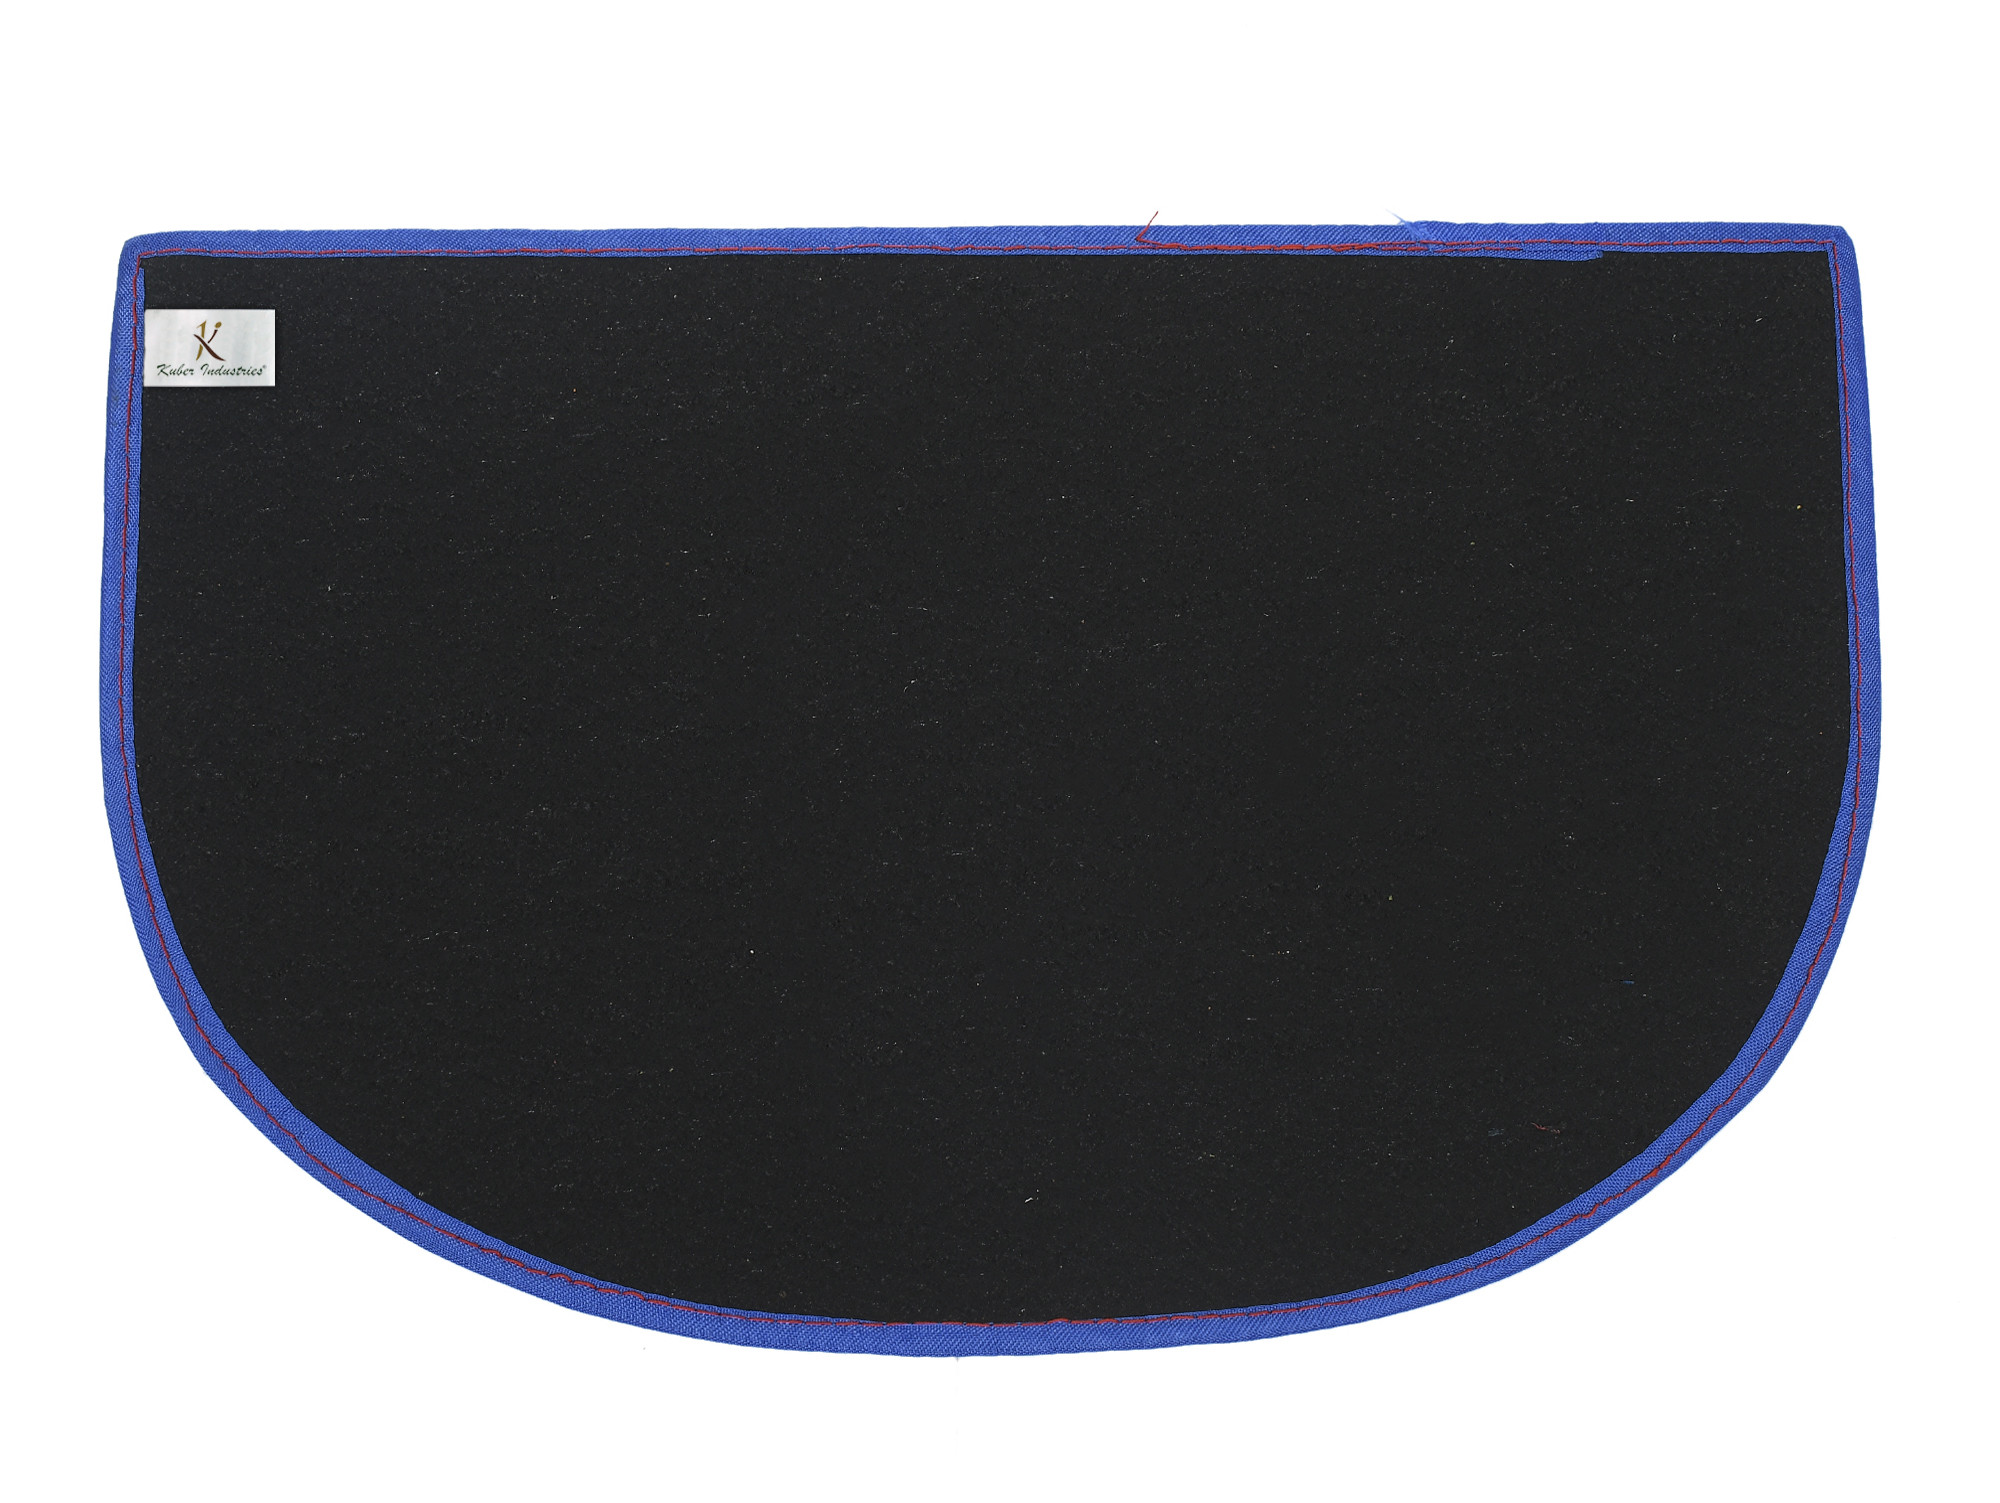 Kuber Industries D-Shape Microfiber Anti Slip 2 Pieces Door Mat (14'' x 23'',Blue & Brown)-KUBMRT12212